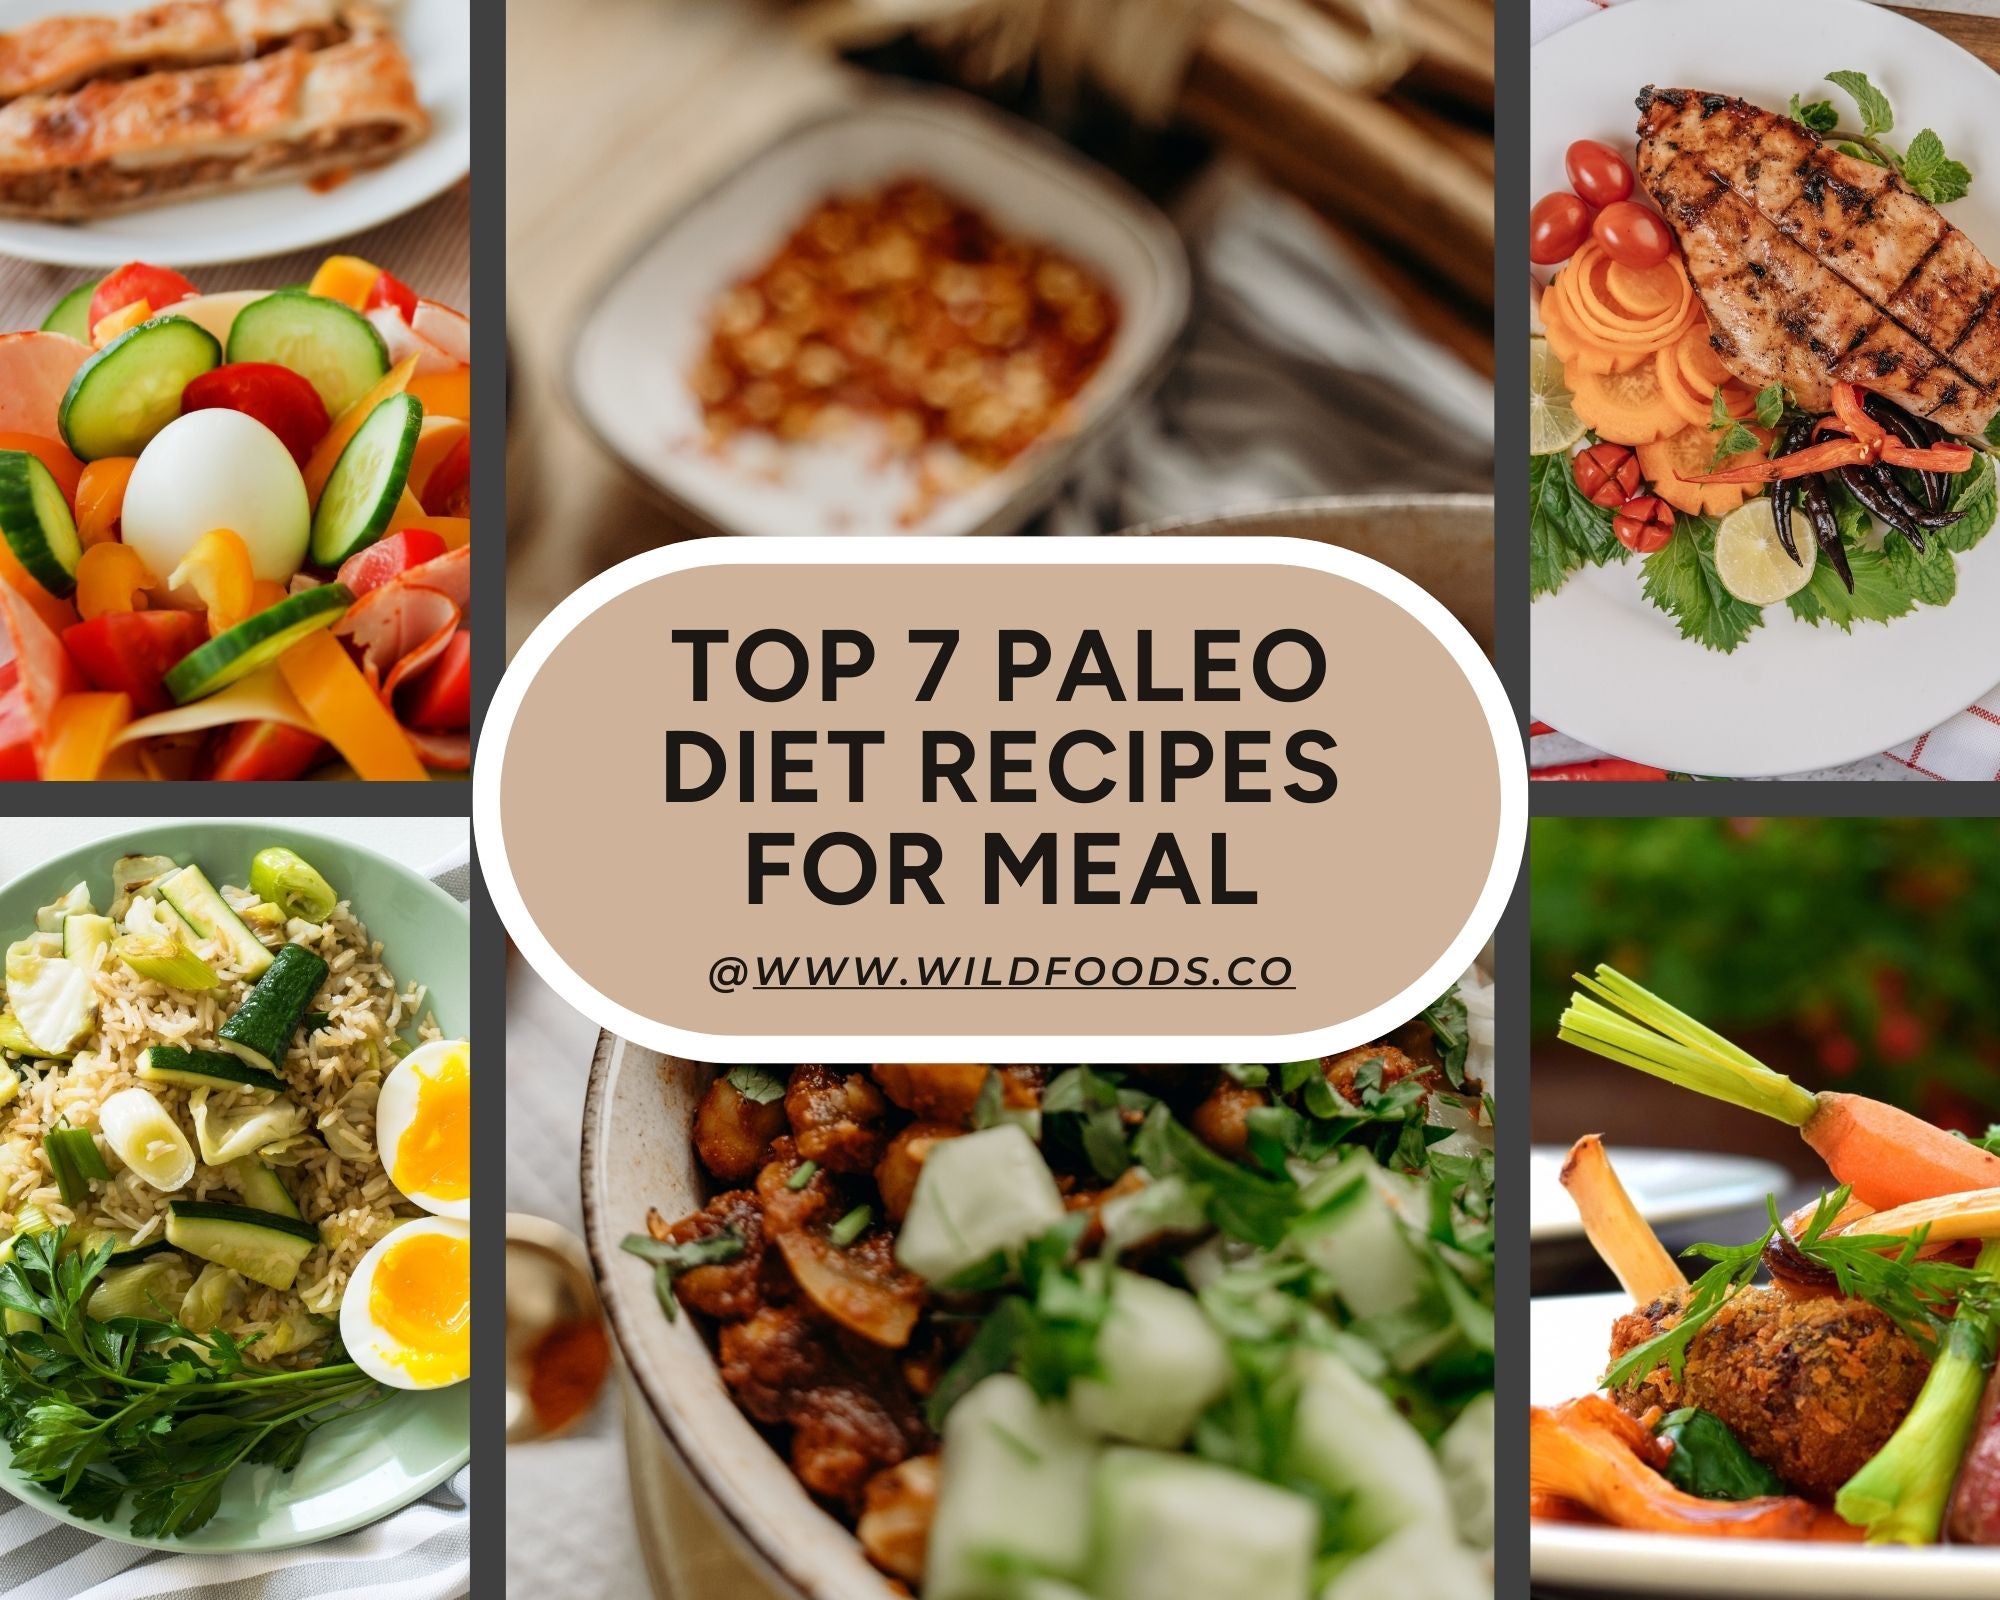 Paleo Diet Foods That Make Amazing Meals